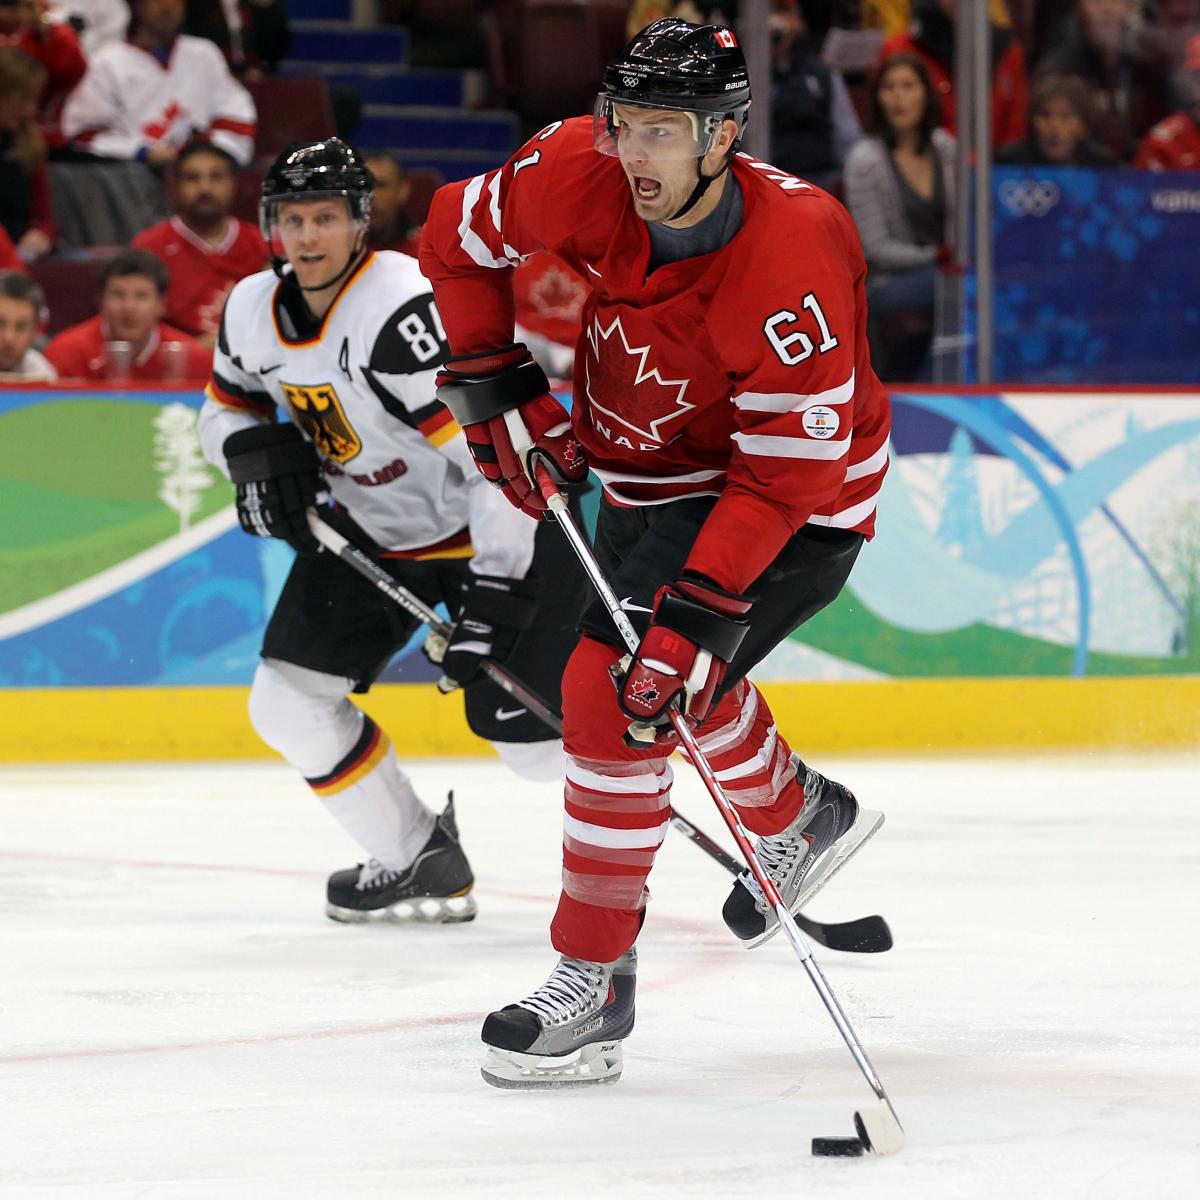 Team Canada Third Jersey Unveiled for 2012 IIHF World Junior Championship